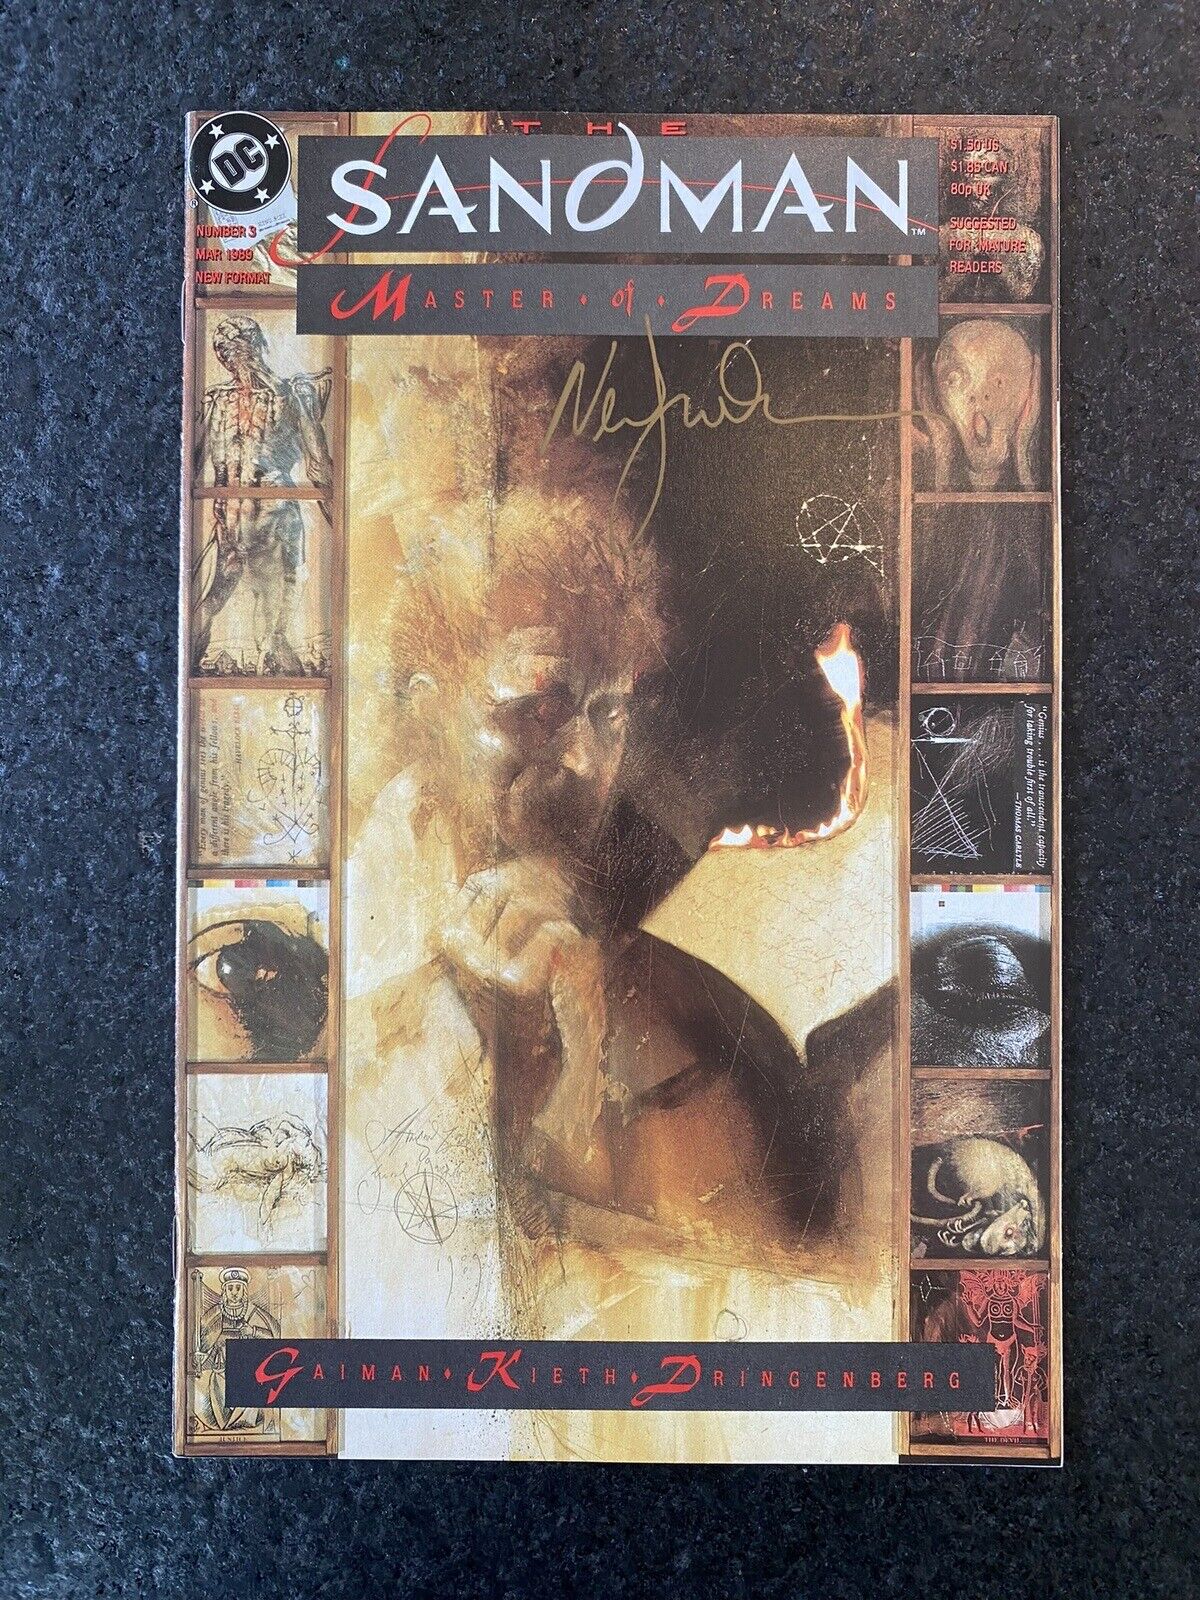 SANDMAN #3 (1989) SIGNED by NEIL GAIMAN - 1st print - RARE - Low Print Run